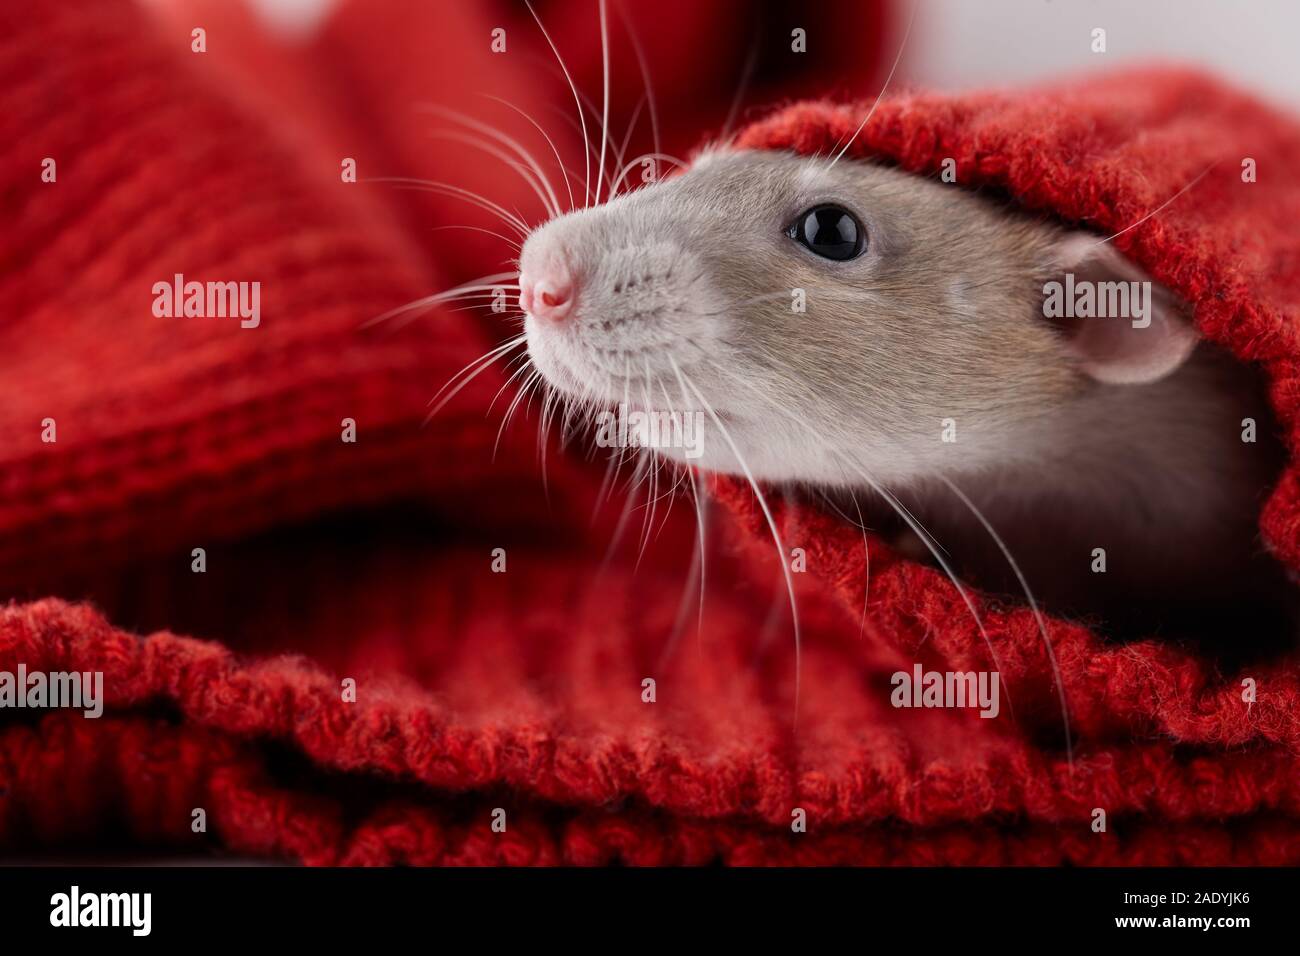 Rat hiding in Christmas winter sweater. New Year 2020 symbol. Stock Photo